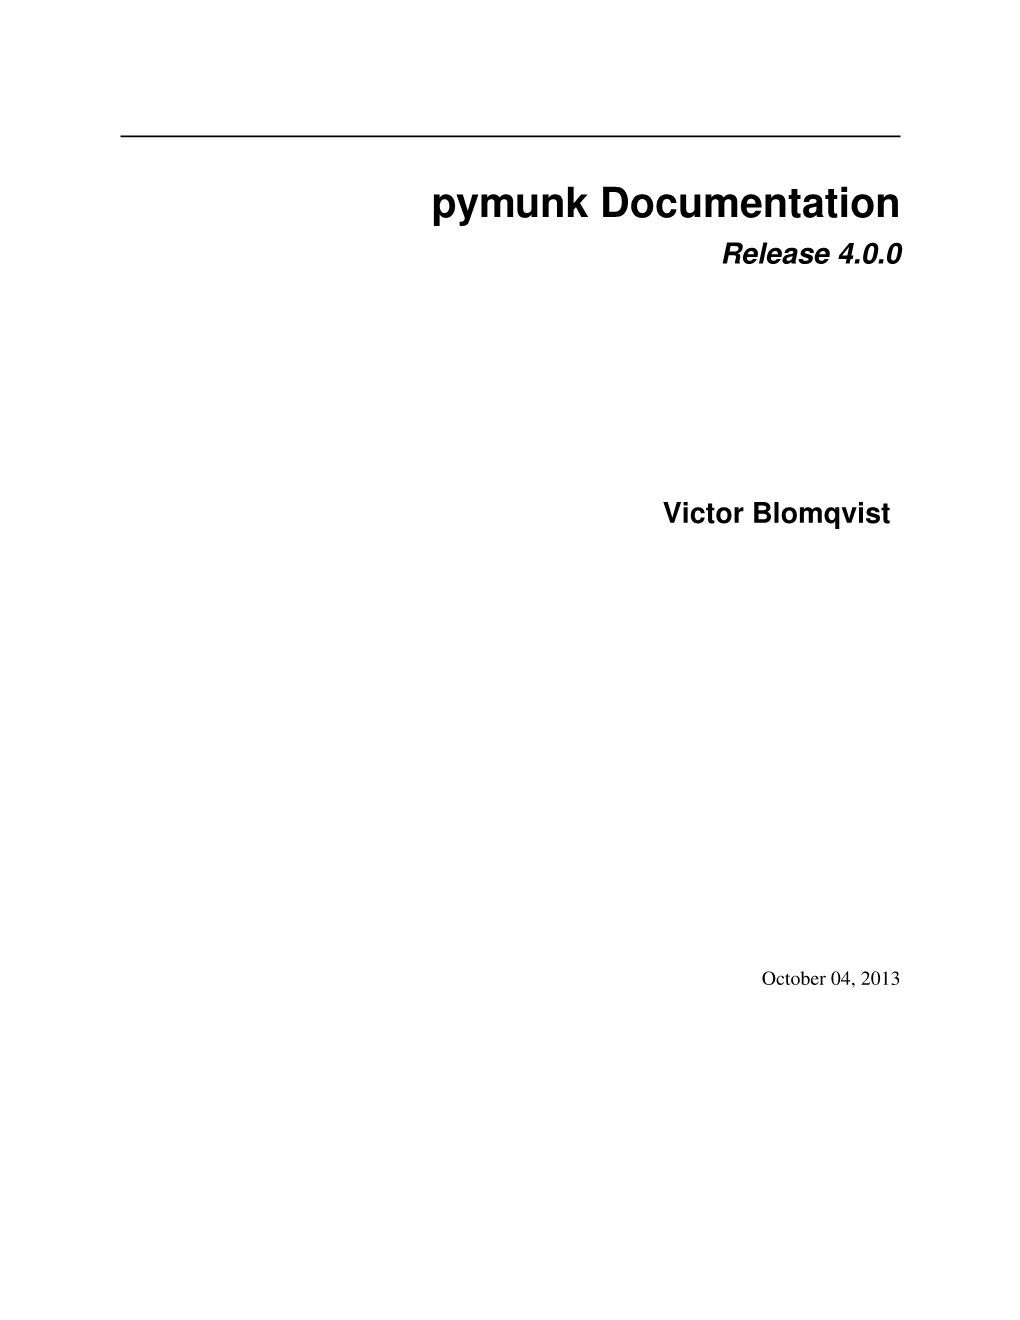 Pymunk Documentation Release 4.0.0